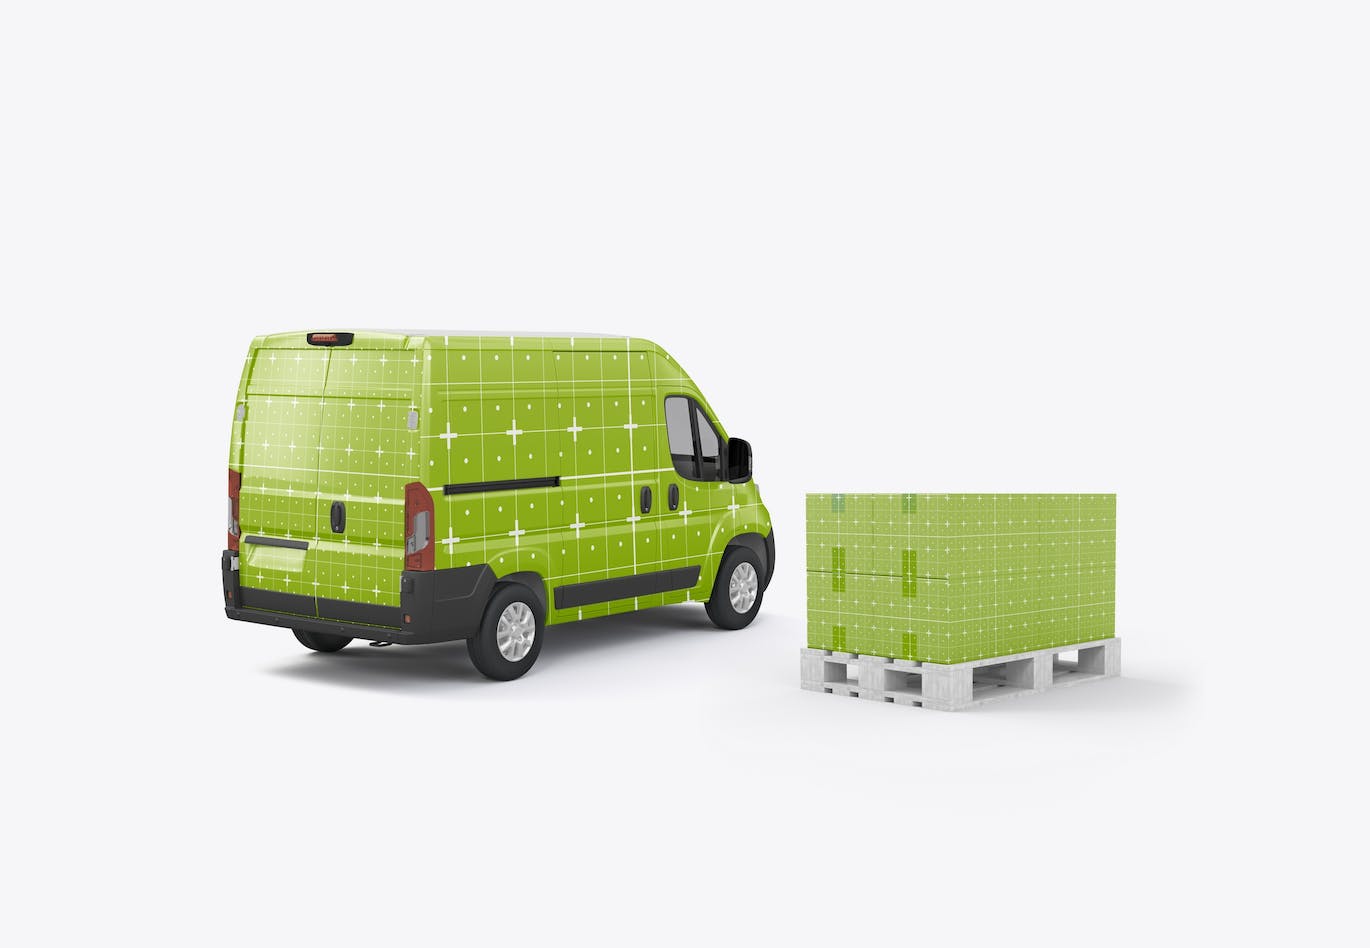 货物托盘纸箱&货车设计样机图 Set Panel Van with Pallet and Boxes Mockup 样机素材 第16张